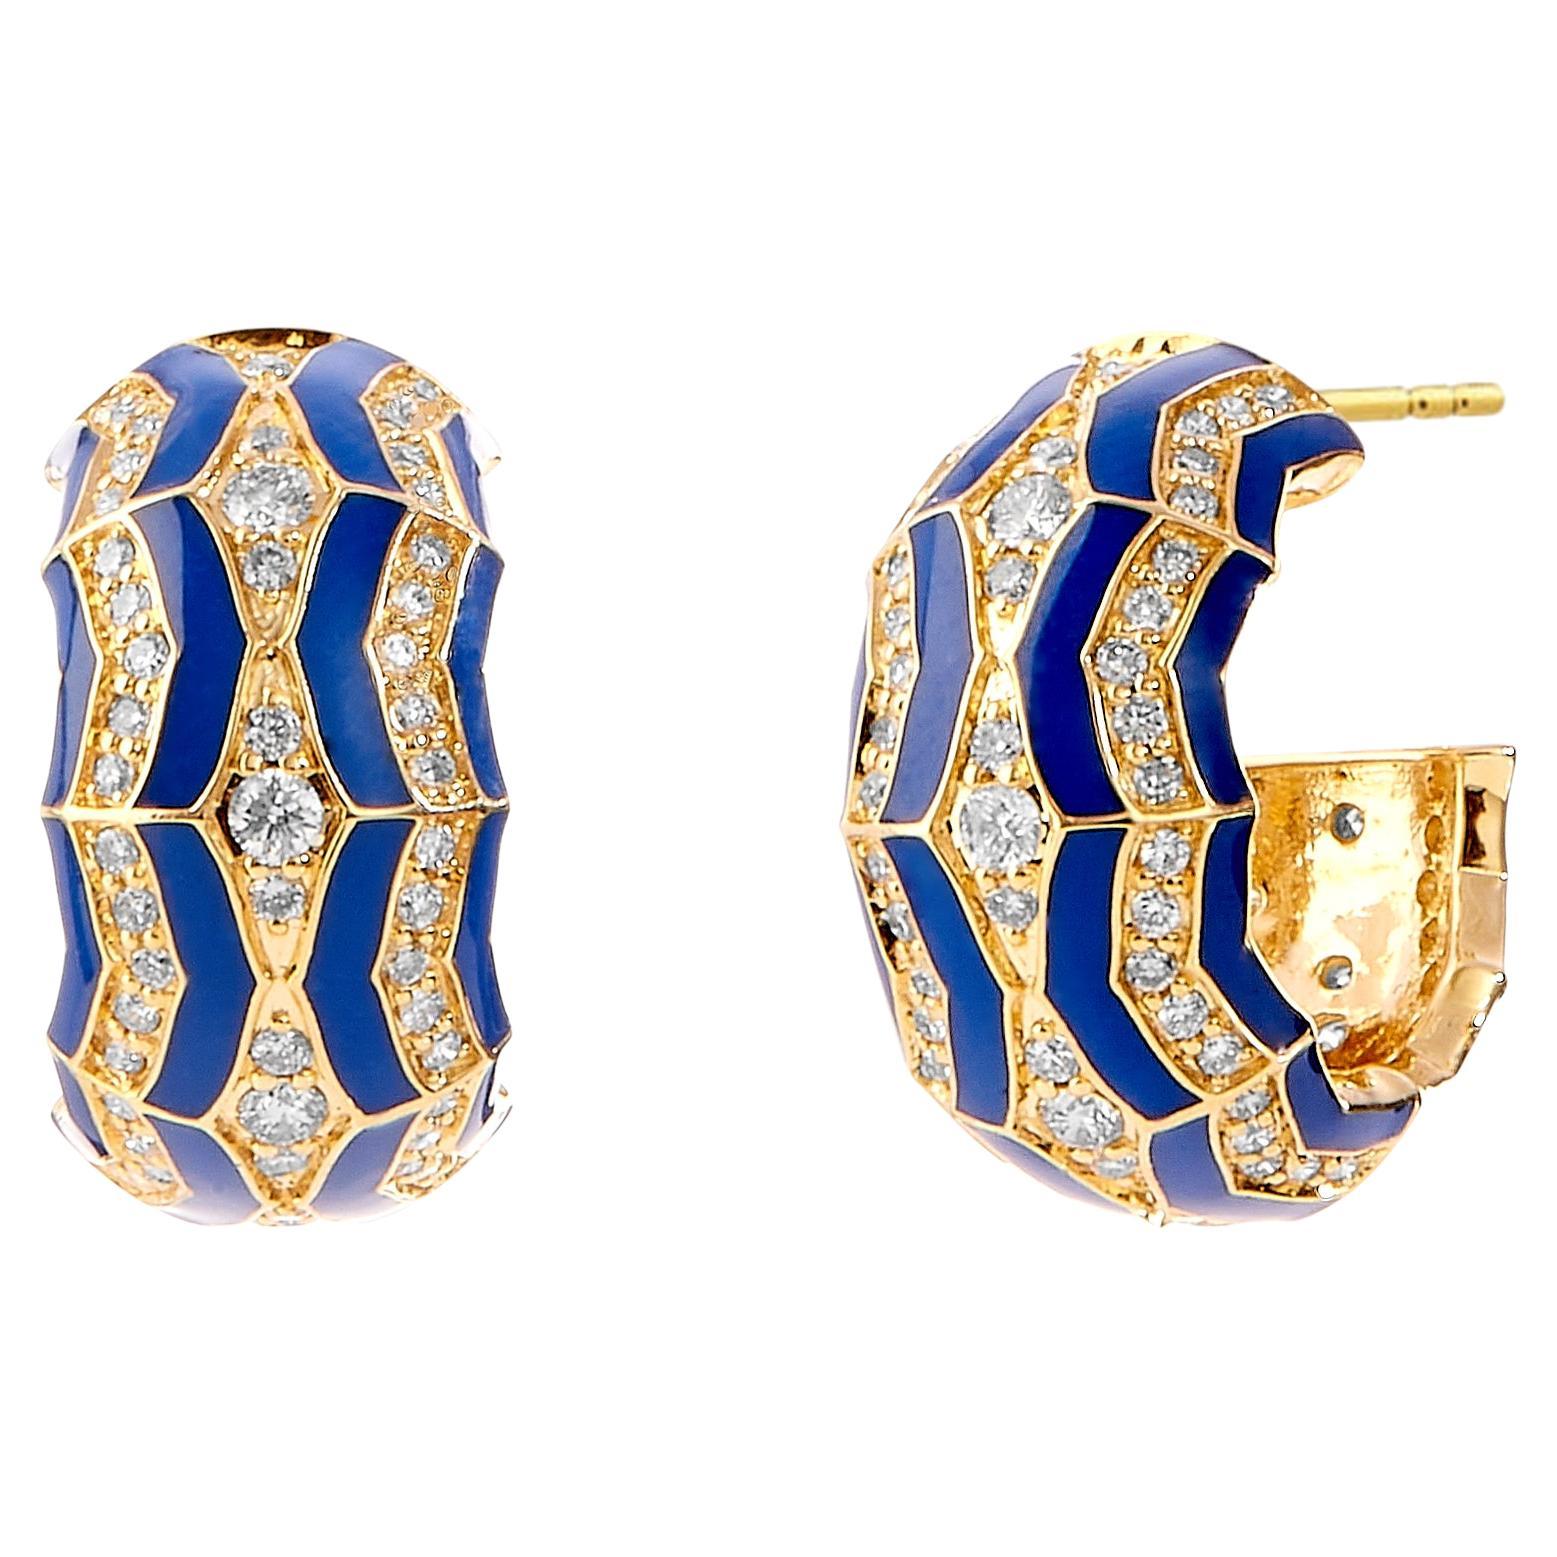 Syna Gelbgold Lapislazuli-Emaille-Ohrringe mit Diamanten